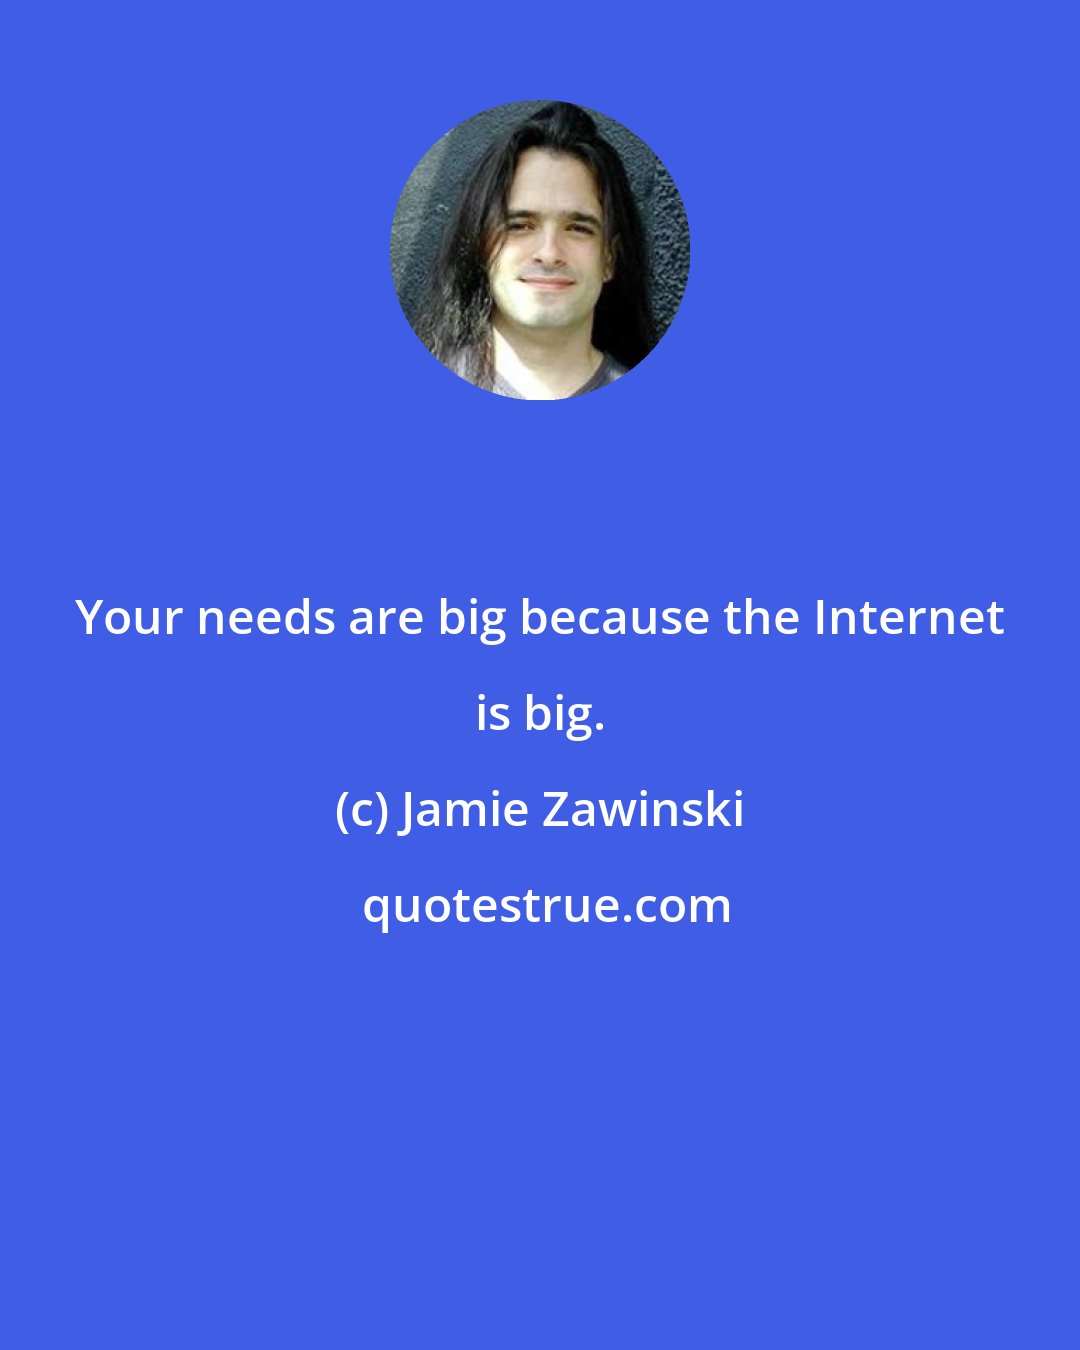 Jamie Zawinski: Your needs are big because the Internet is big.